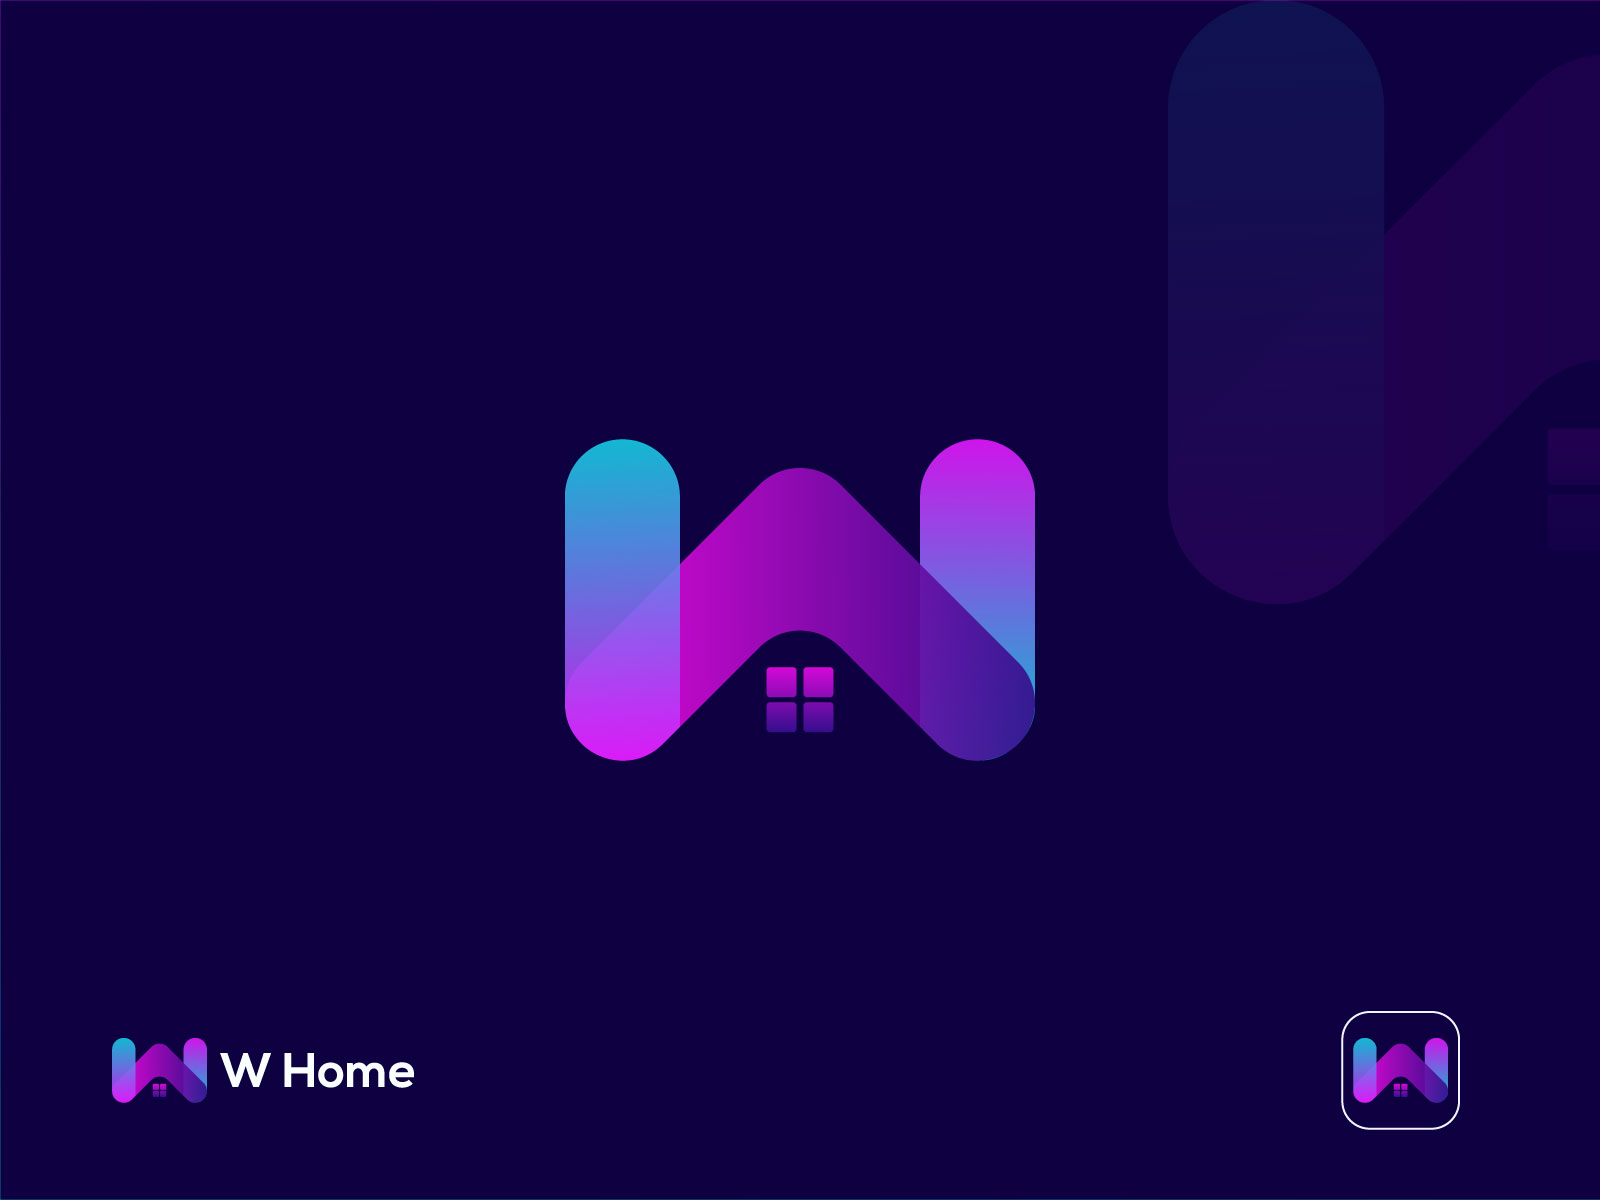 Dribbble - w-home-logo.jpg by Ranas Art